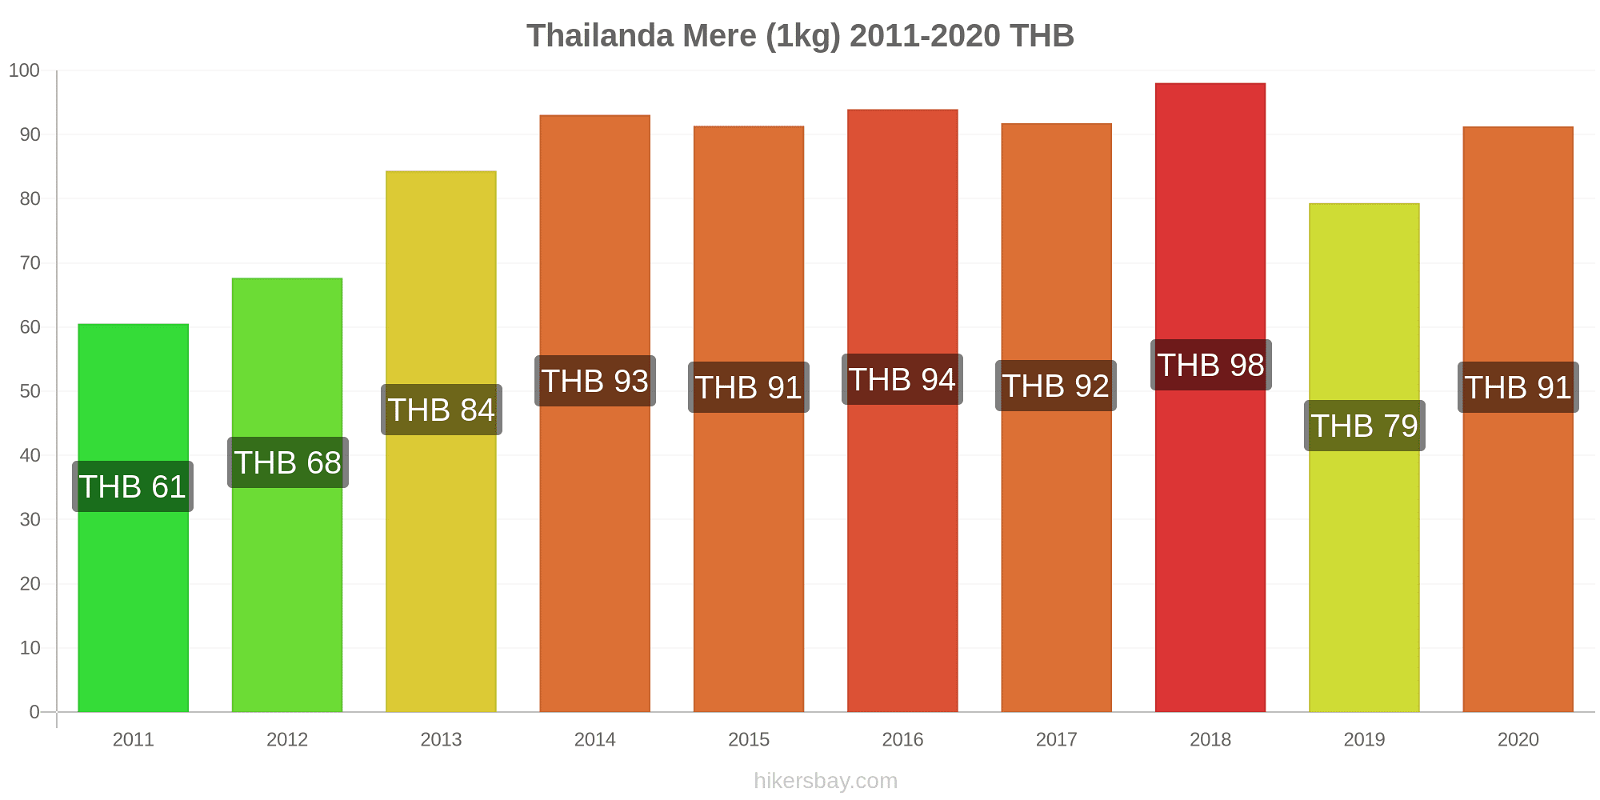 Thailanda modificări de preț Mere (1kg) hikersbay.com